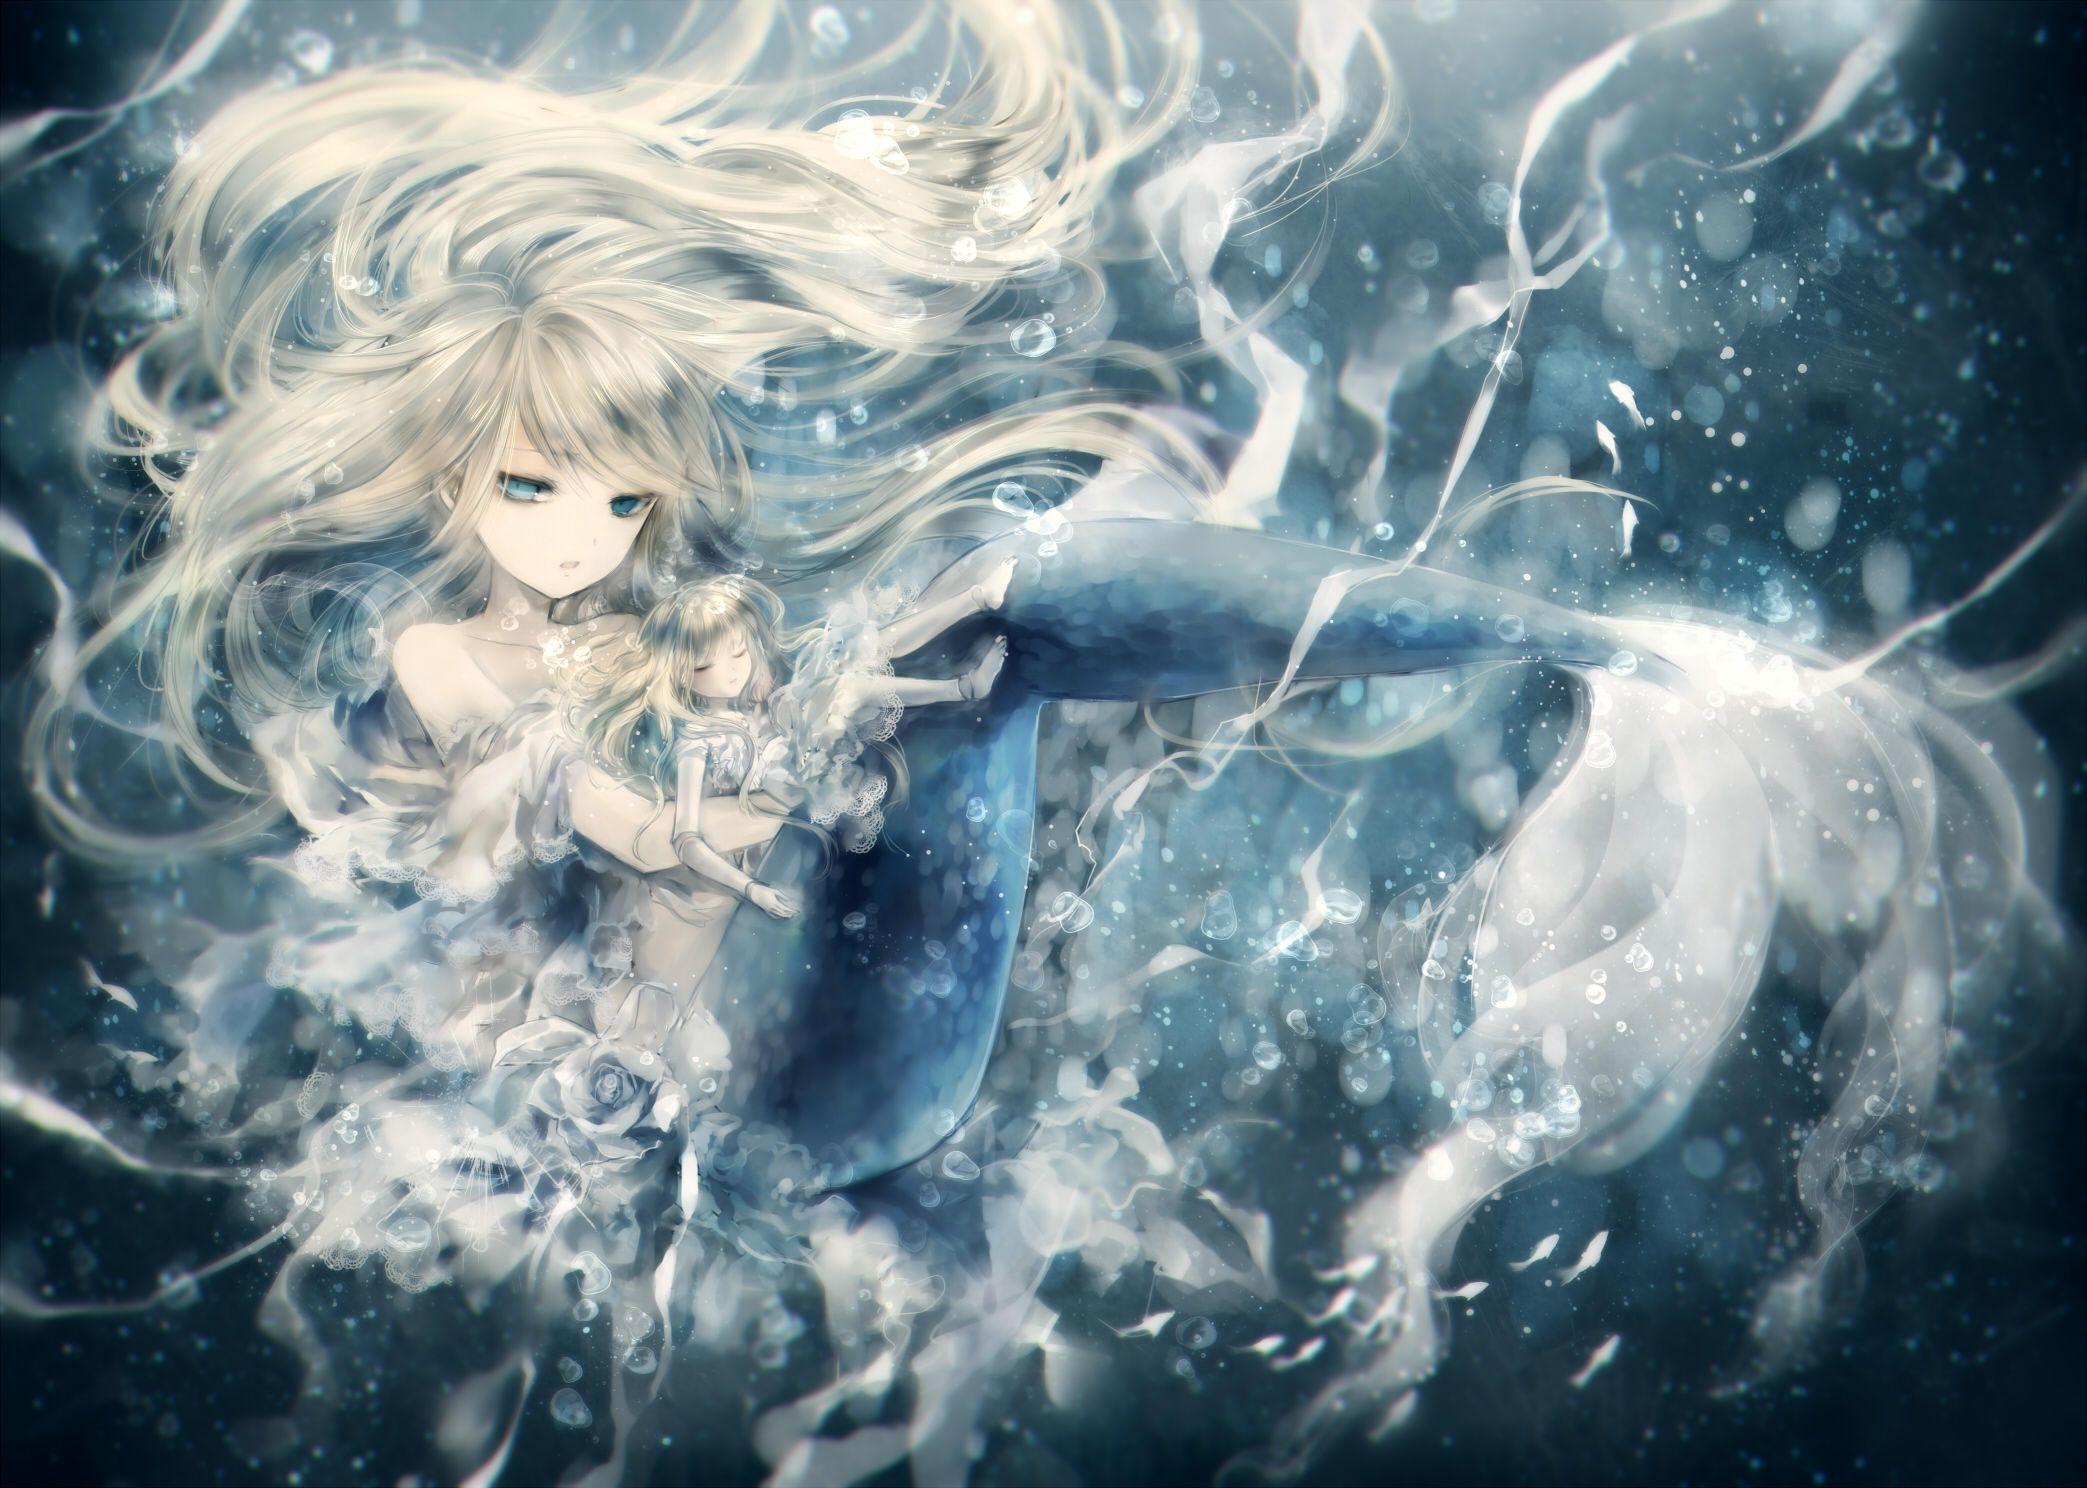 Anime Mermaid Images - Free Download on Freepik